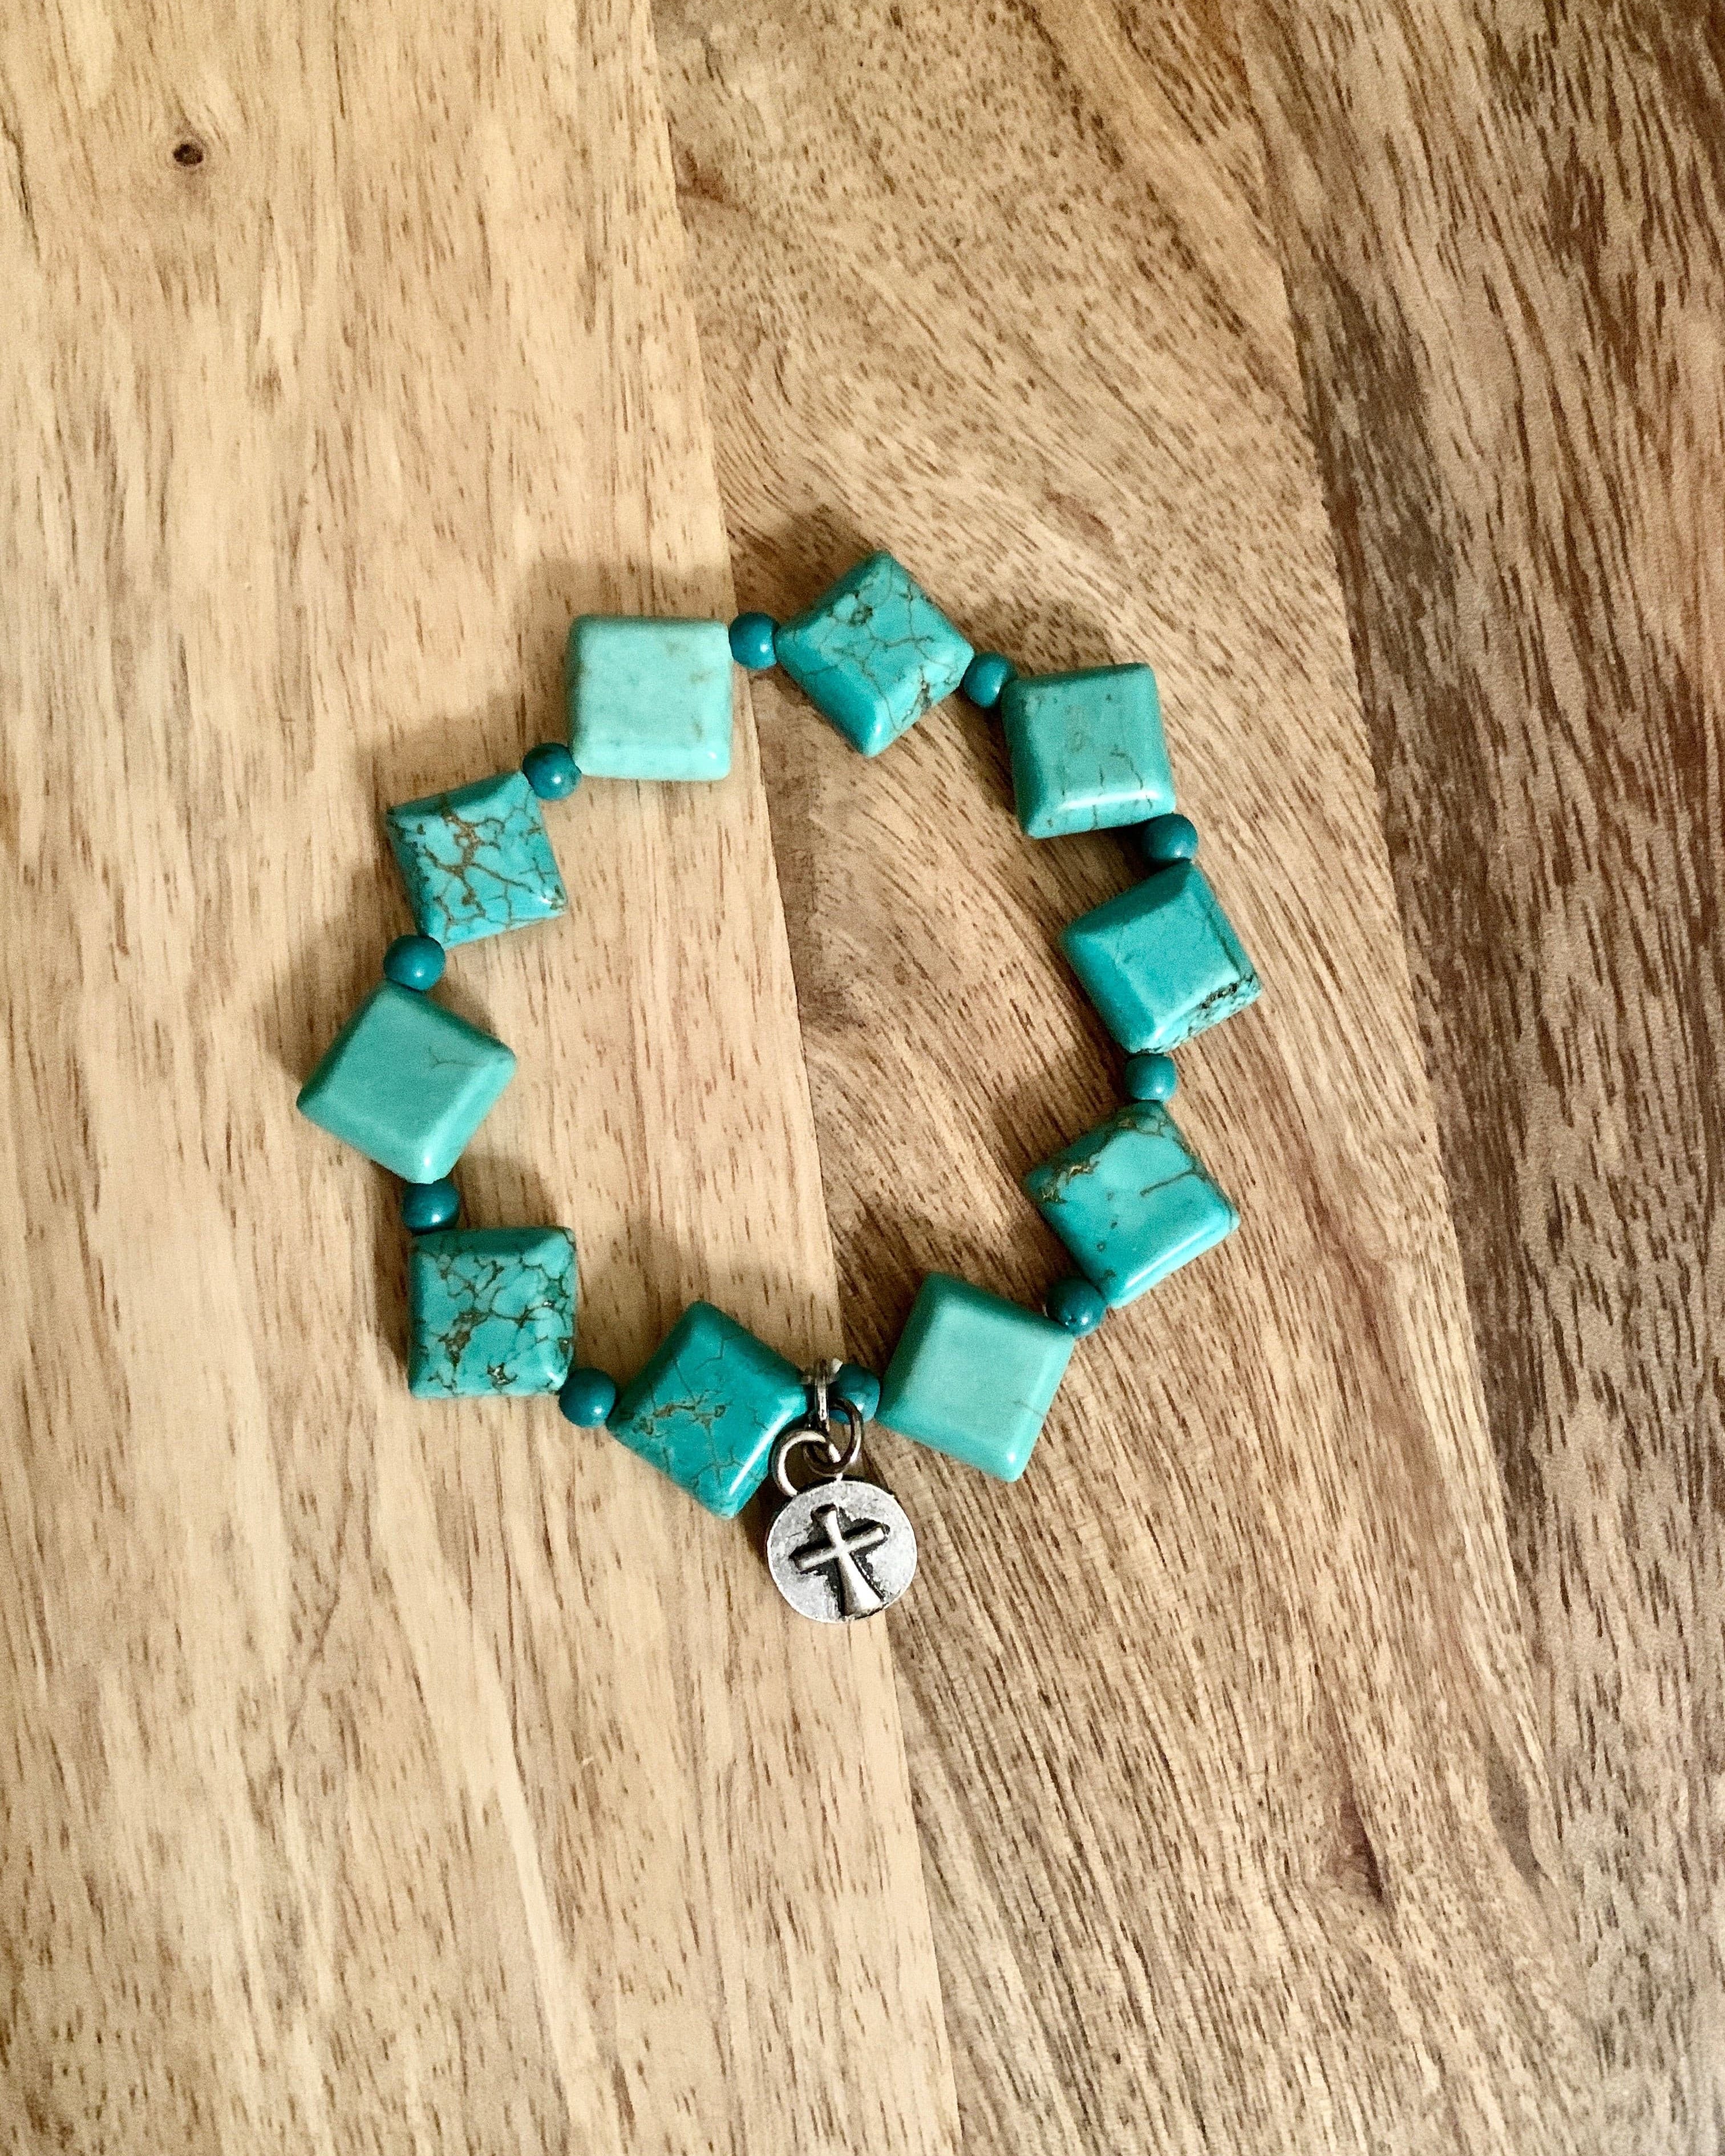 Turquoise Square Bracelet.